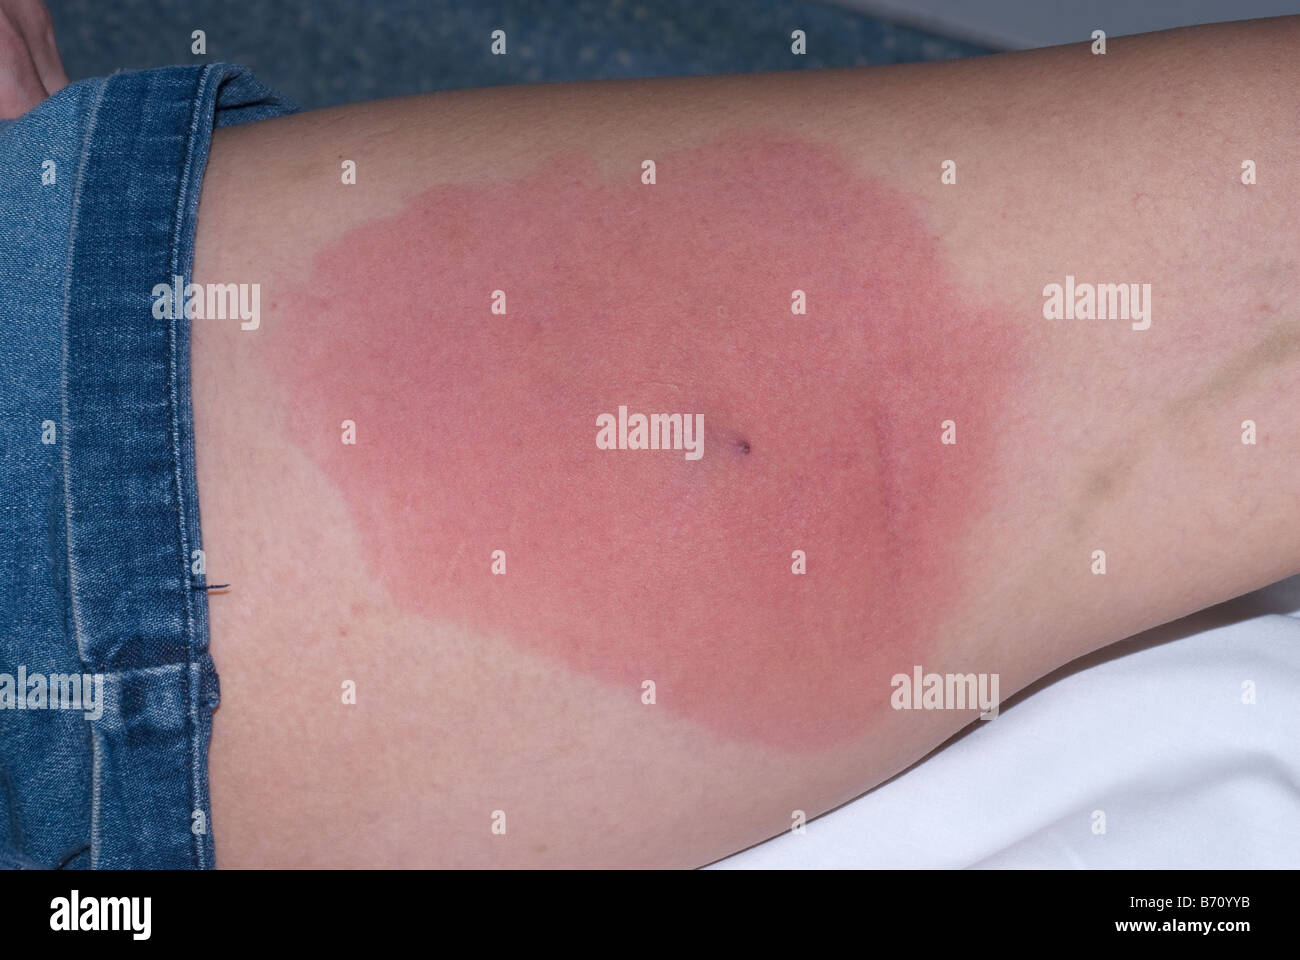 Staphylococcus Aureus Skin Immagini E Fotos Stock Alamy [ 960 x 1300 Pixel ]